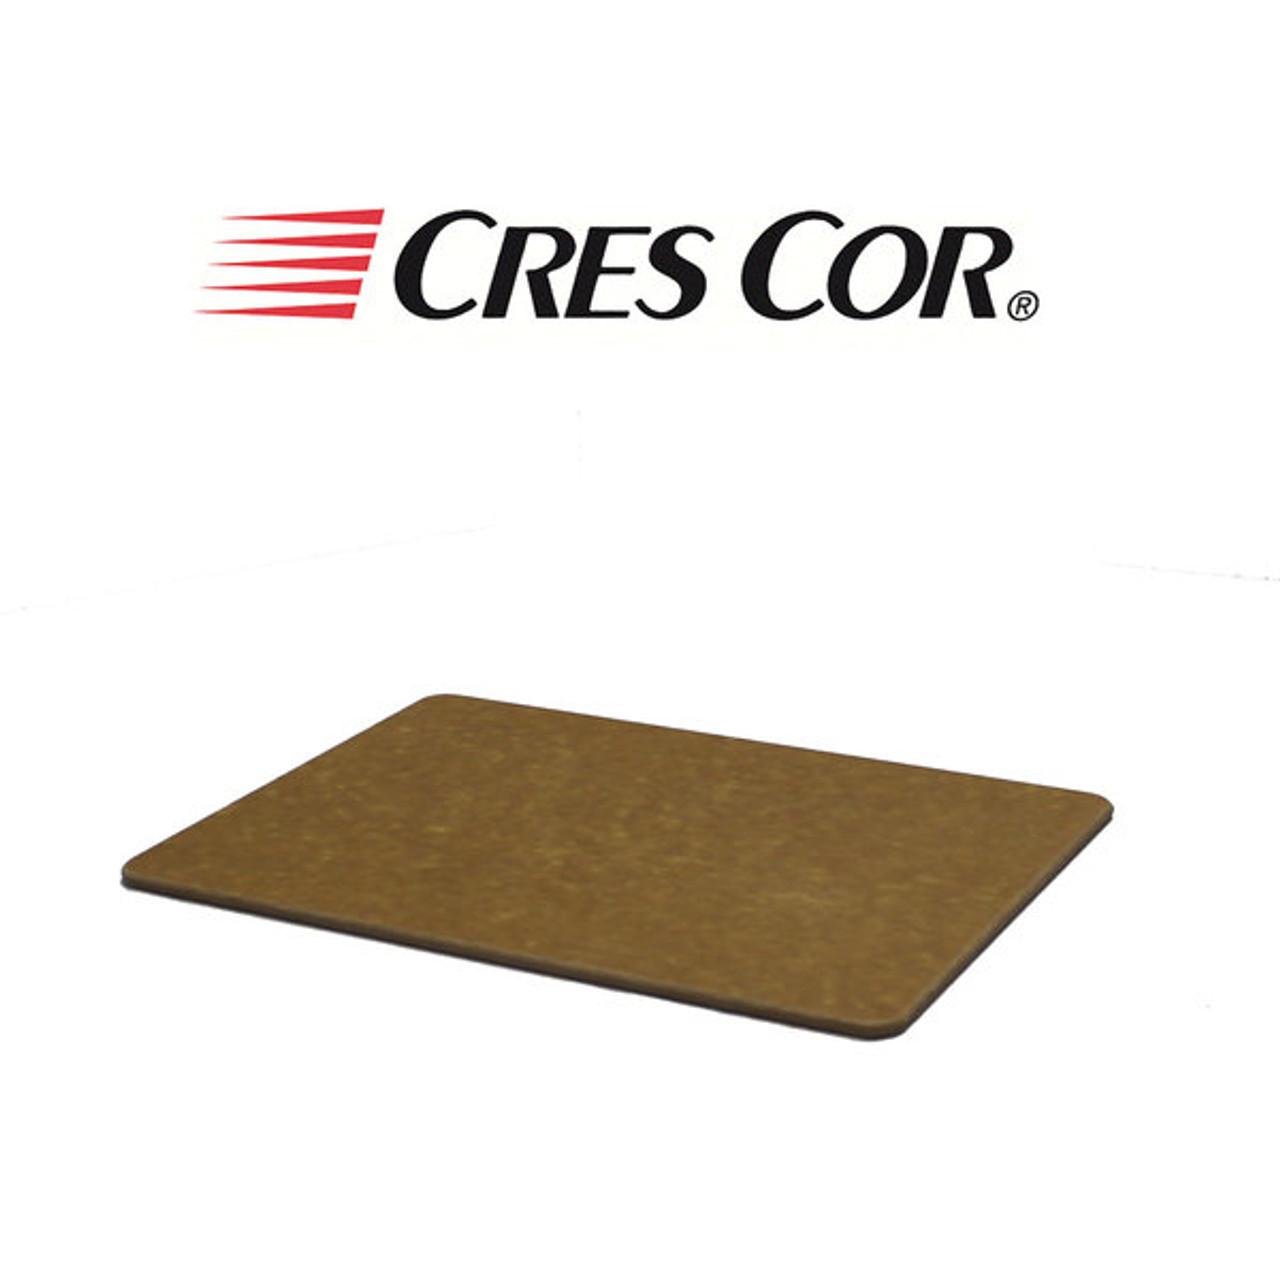 OEM Cutting Board - Cres Cor - P#: 1004-018